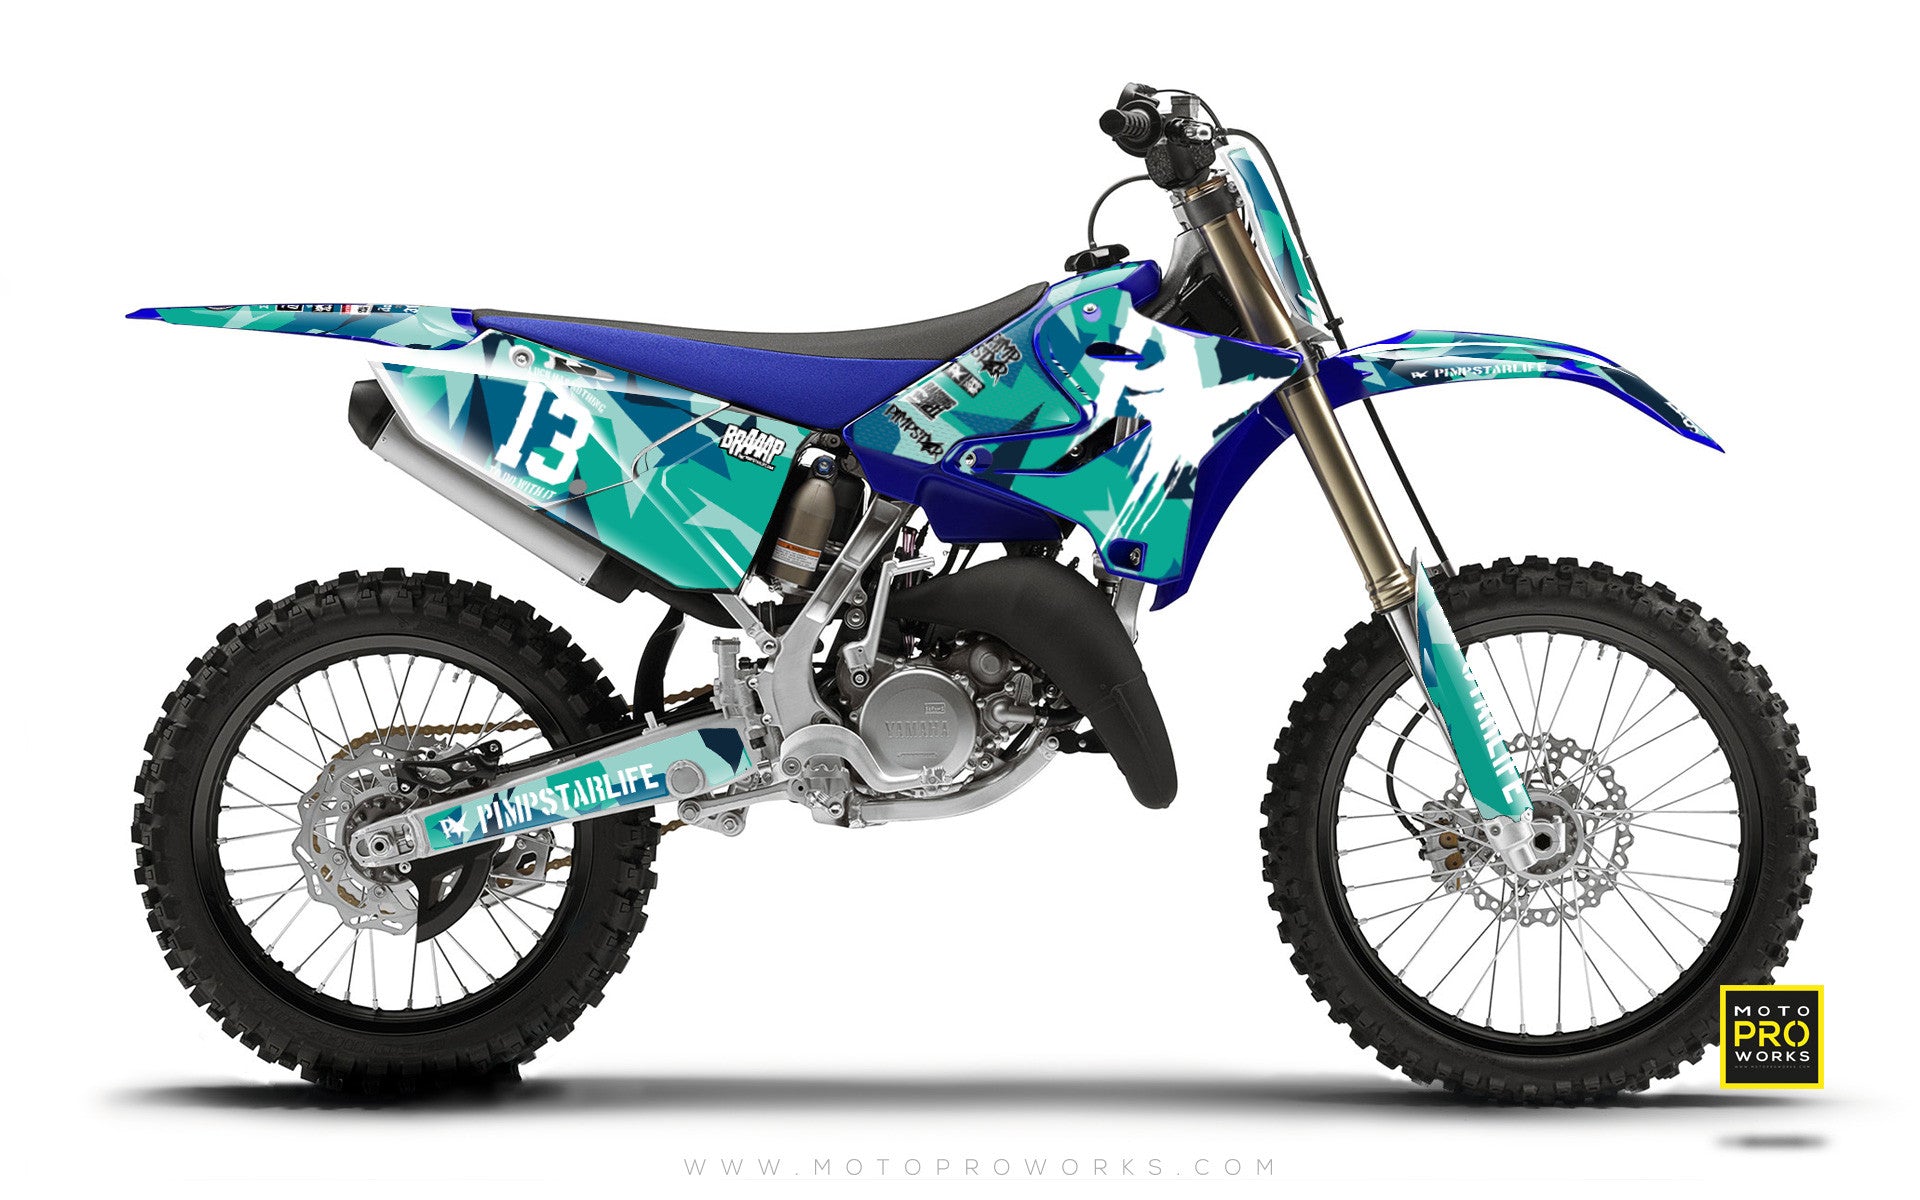 Yamaha GRAPHIC KIT - "-M90" (Banger) - MotoProWorks | Decals and Bike Graphic kit